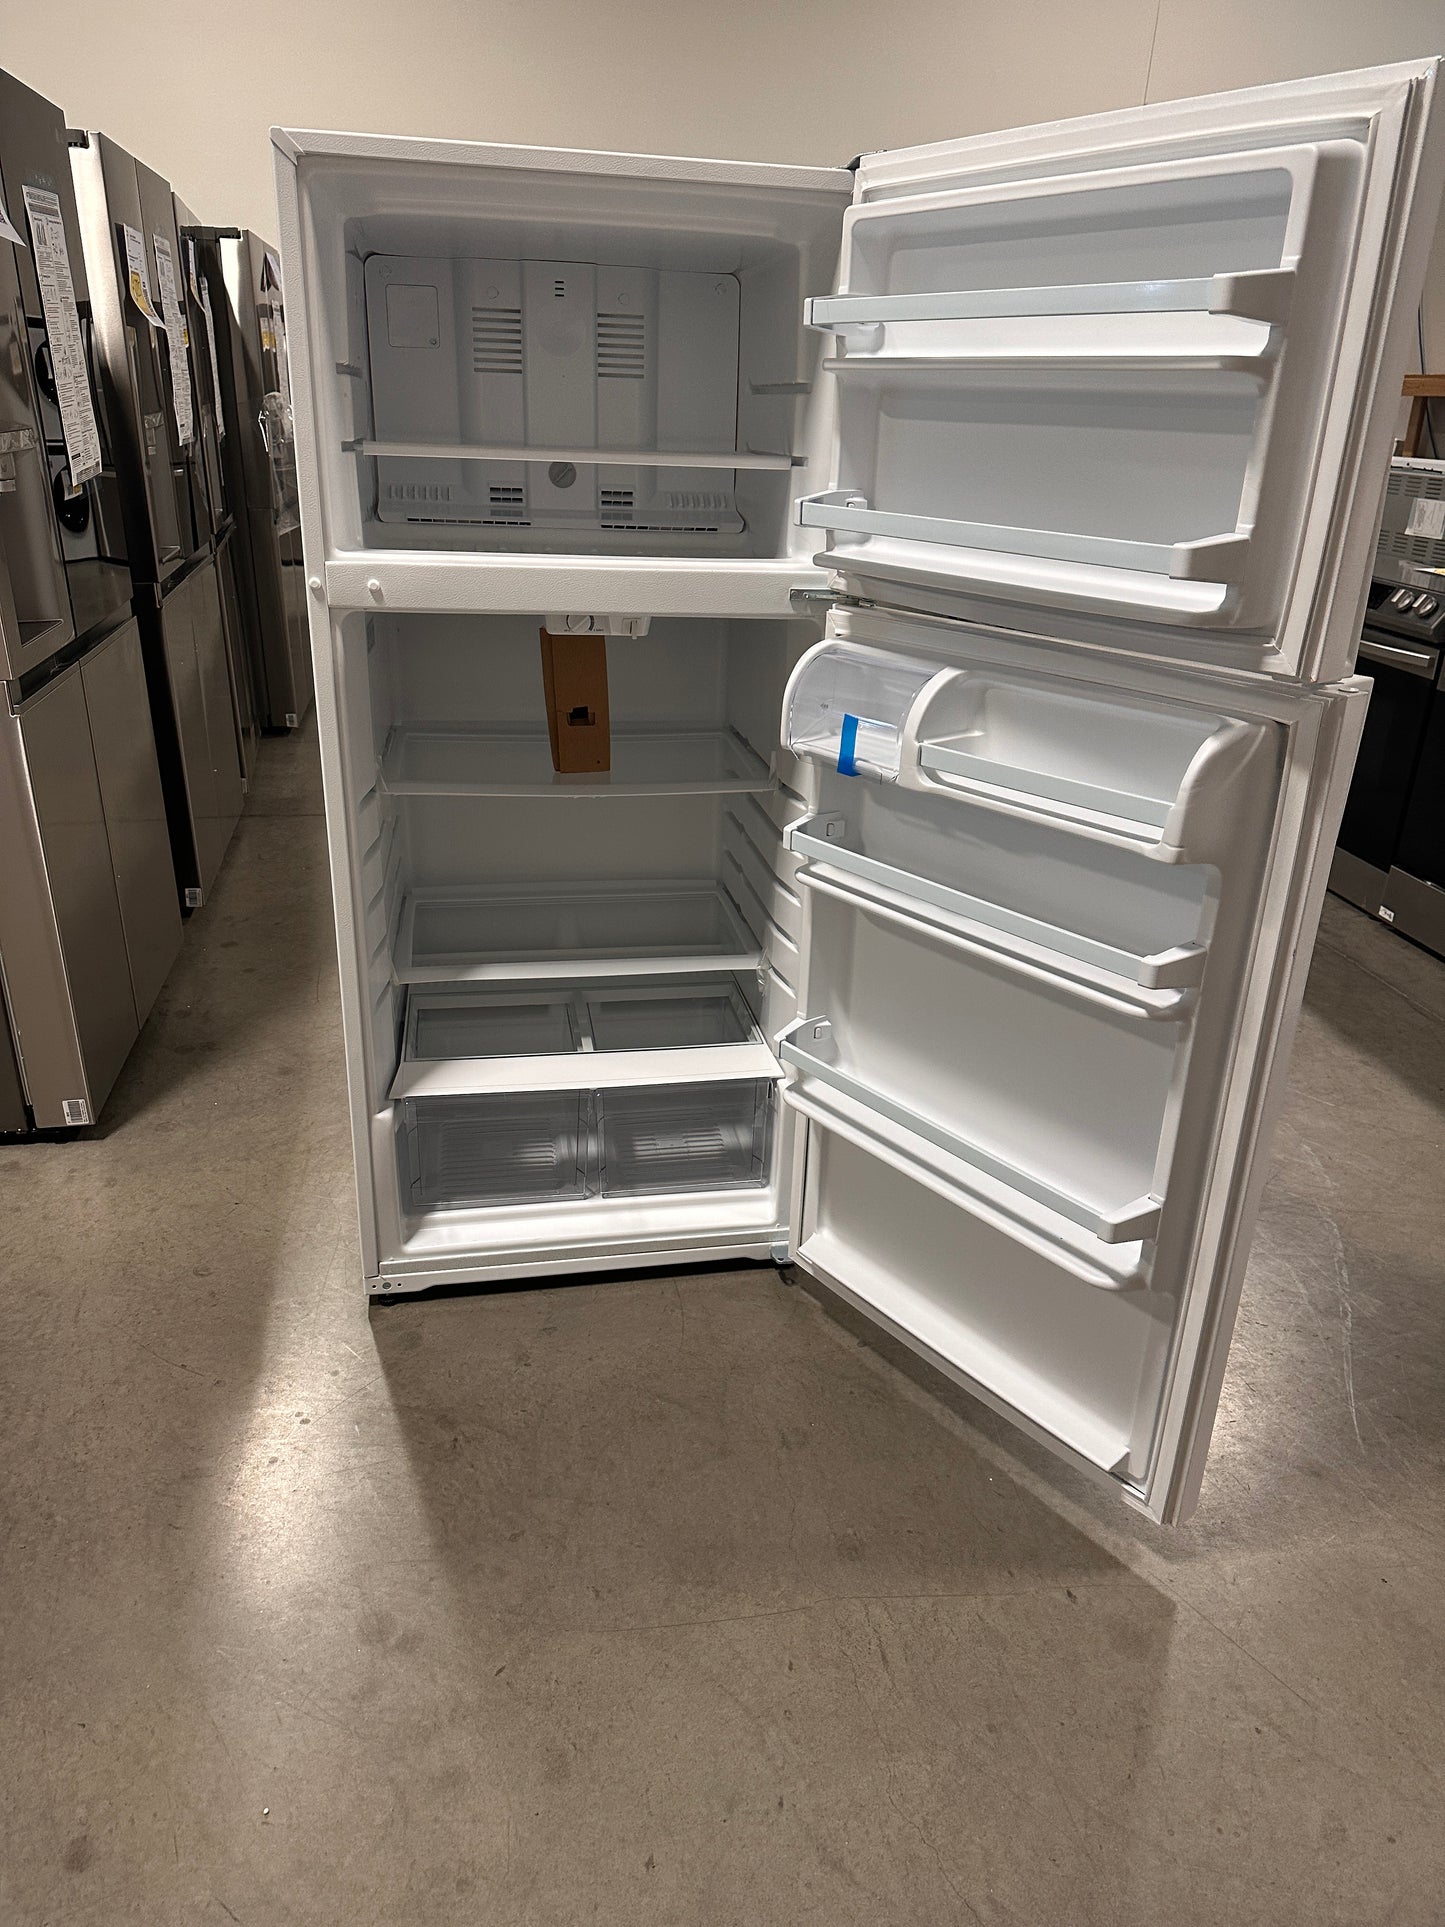 New Whirlpool - 14.3 Cu. Ft. Top-Freezer Refrigerator -  MODEL: WRT314TFDW  REF12983